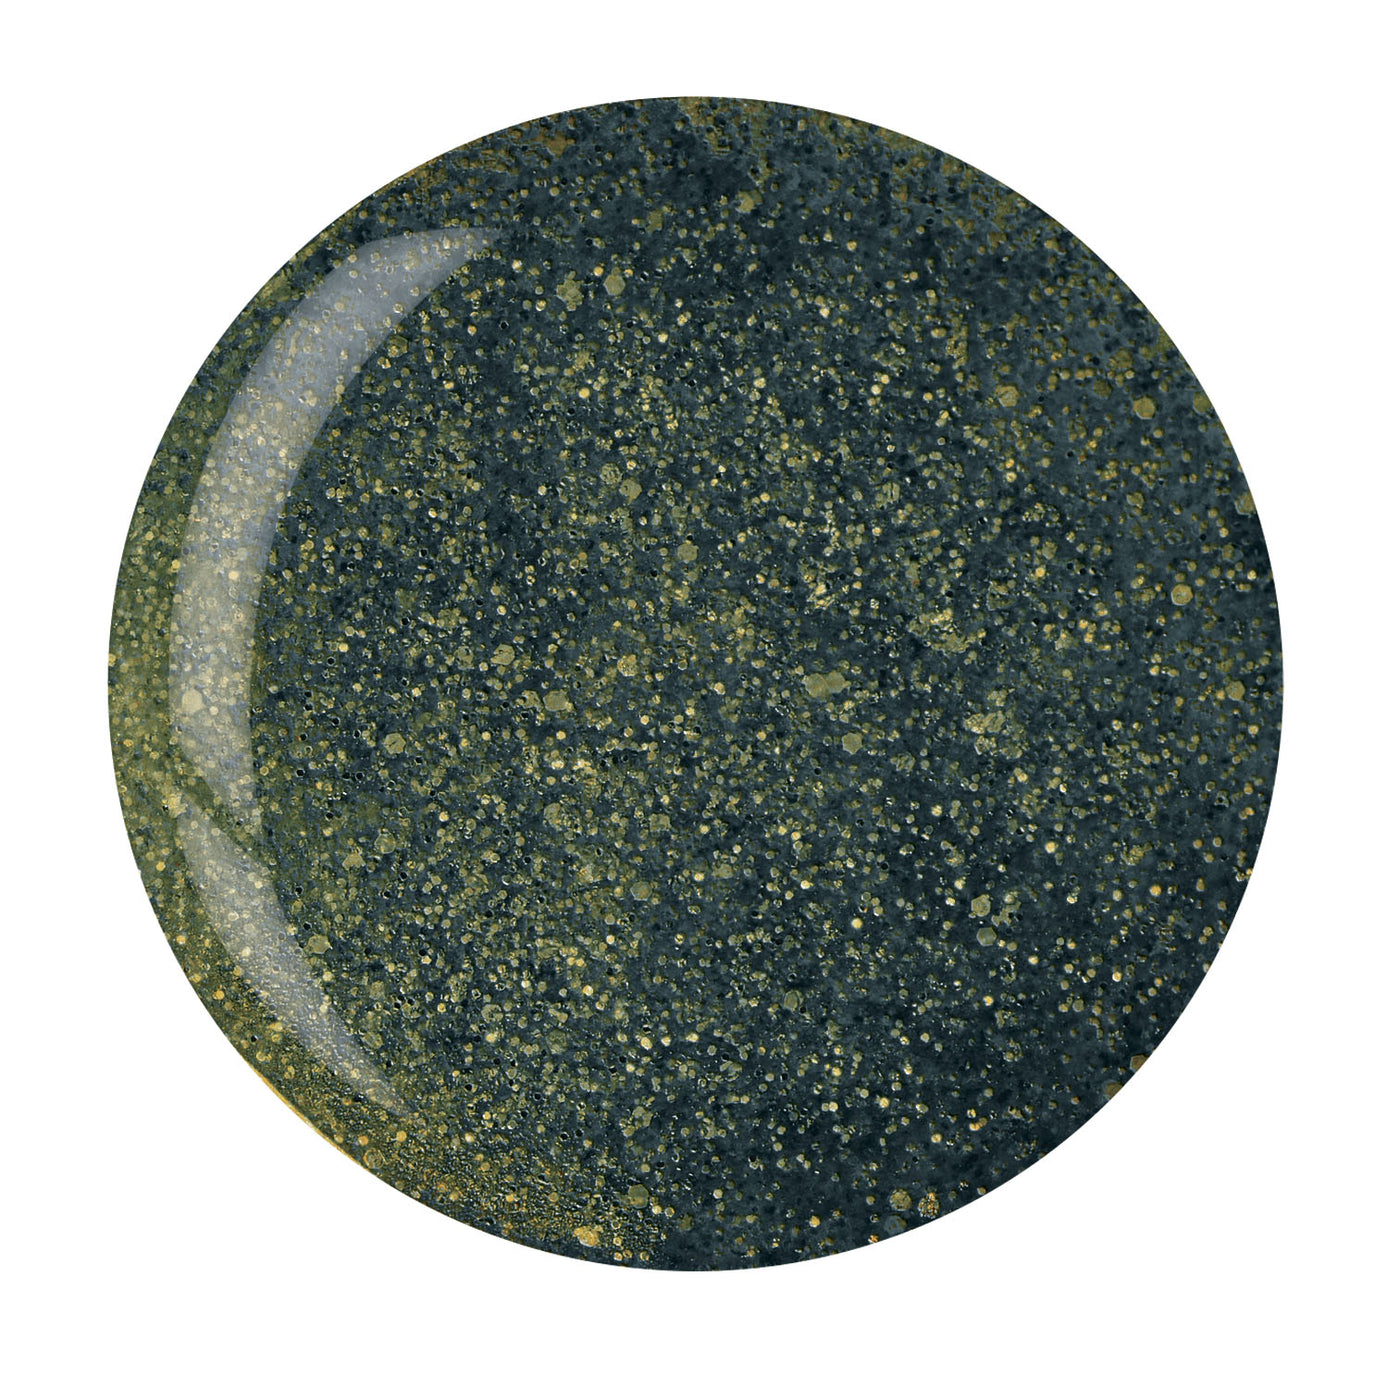 CP Dipping Powder14g - 5593-5 Green Glitter W/ Blue Underton